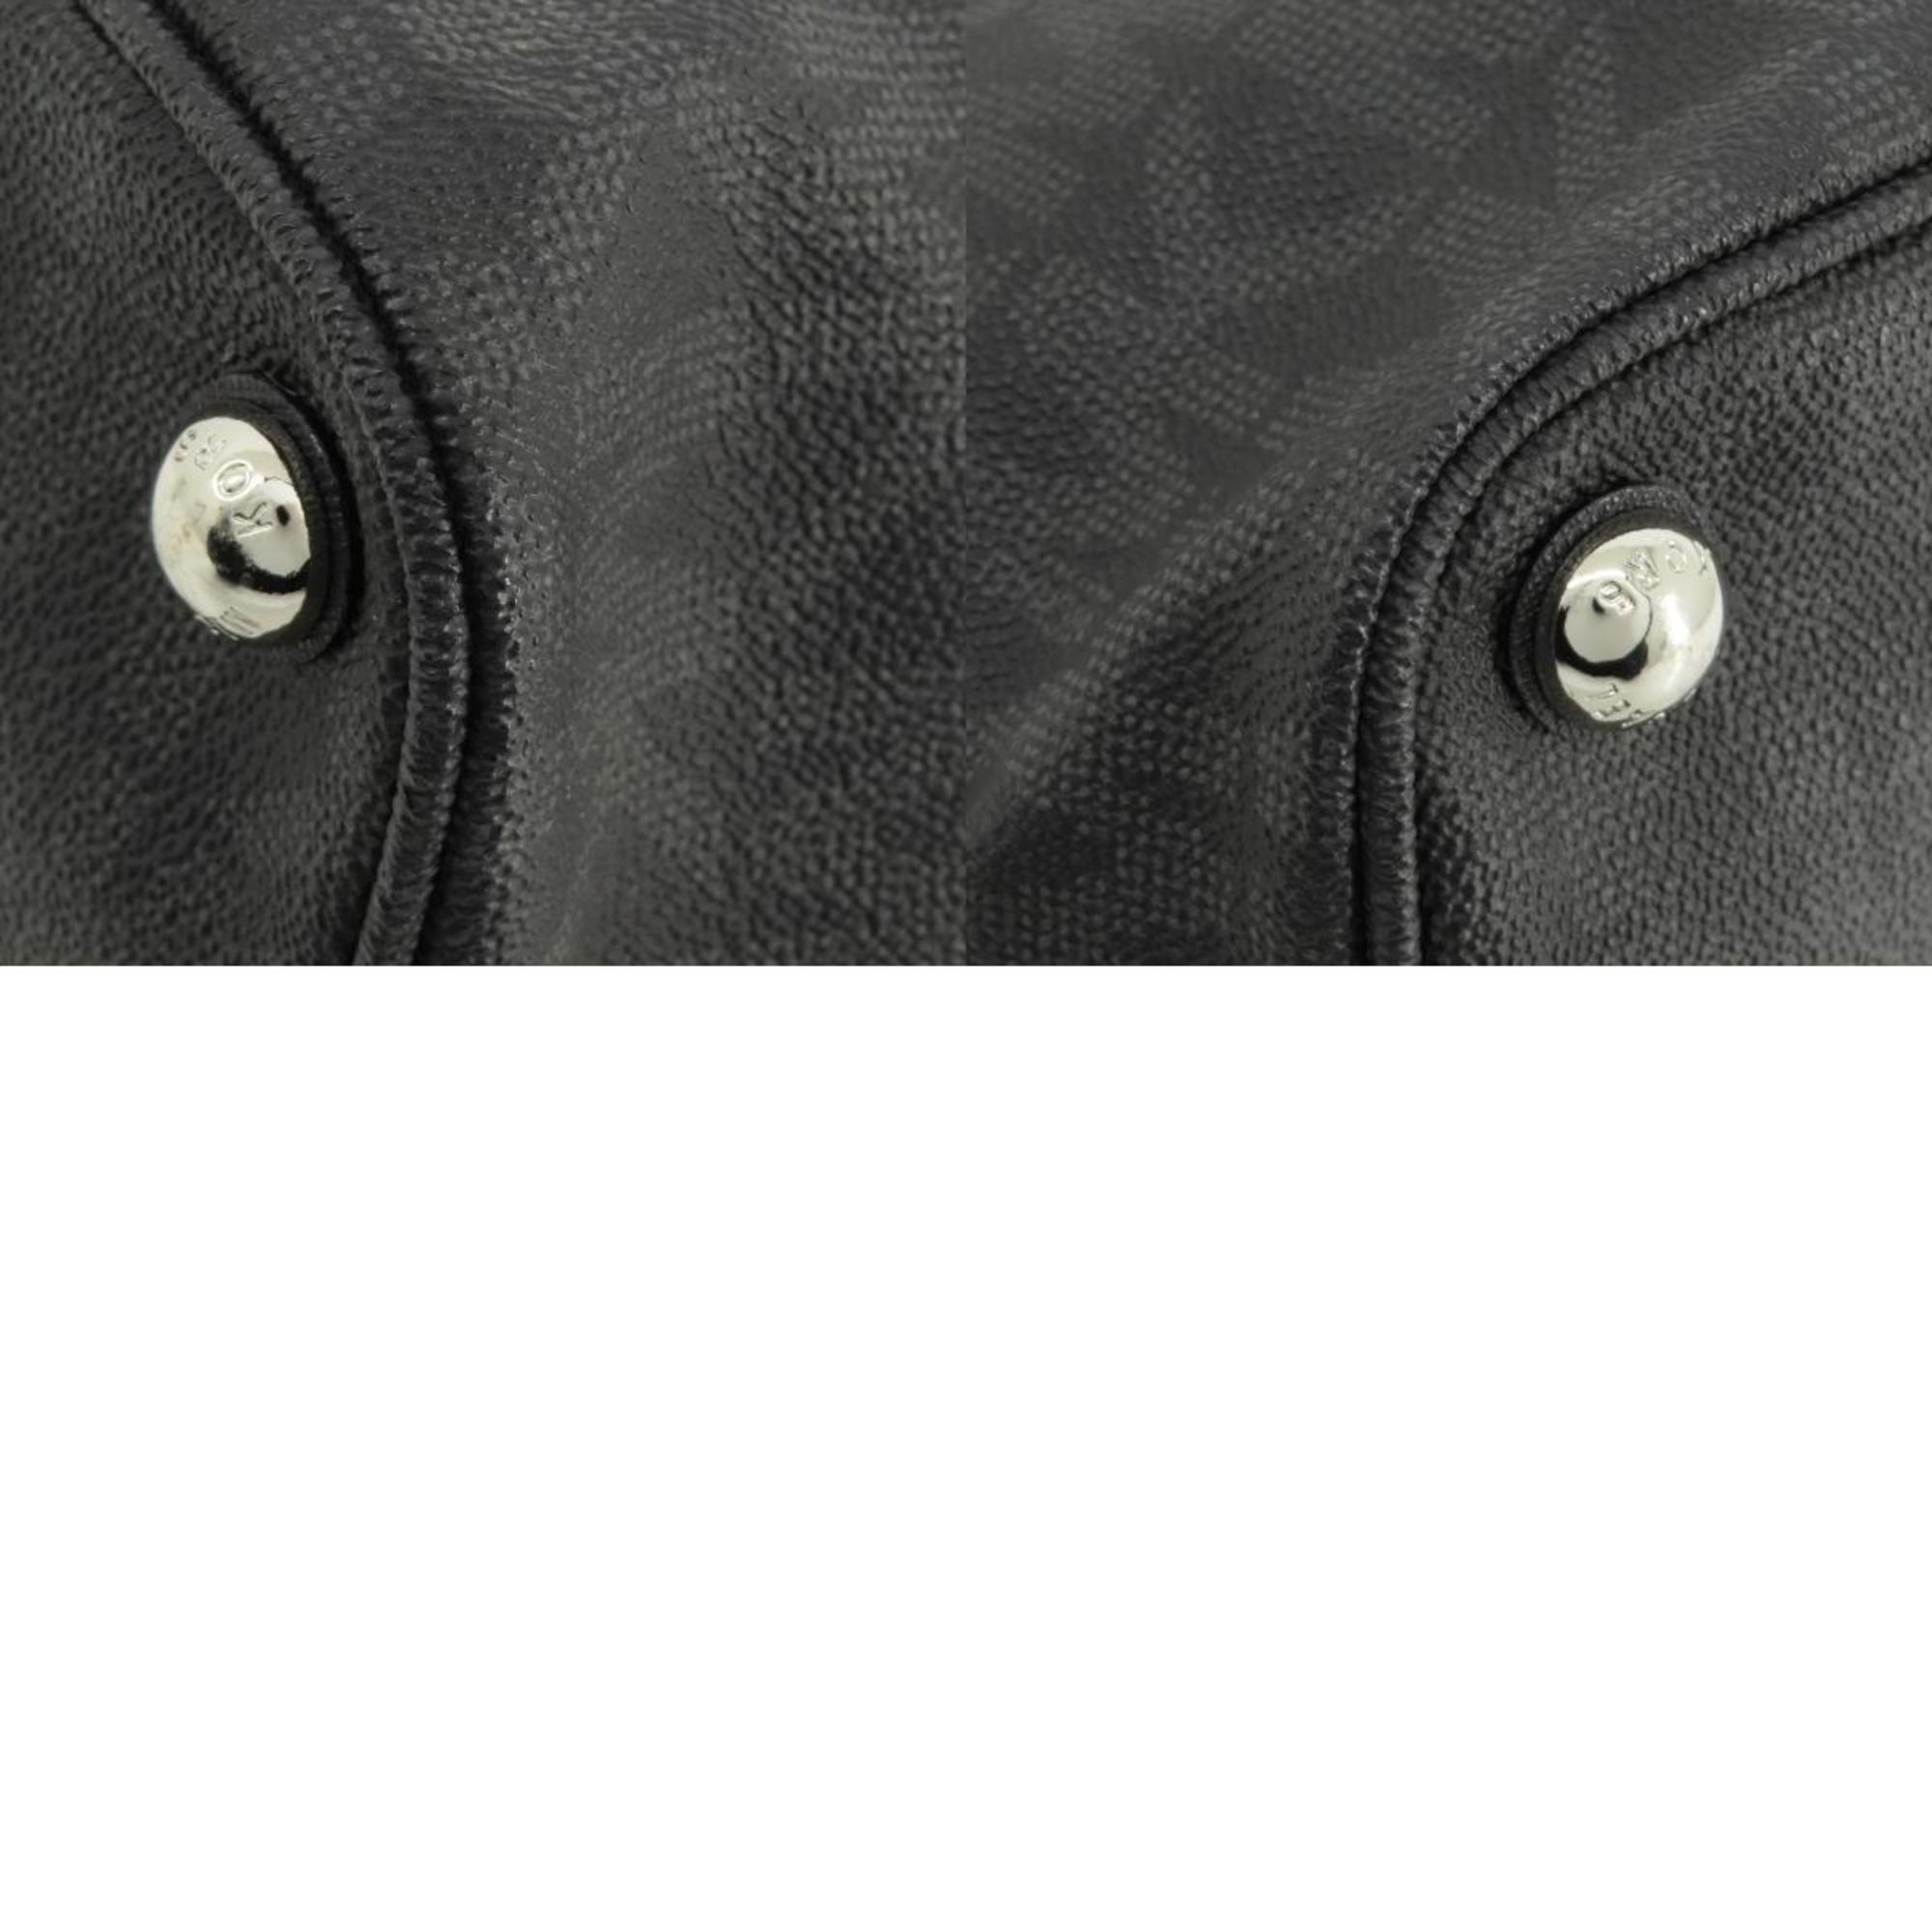 Michael Kors MK Signature Handbag Leather Coated Canvas Women's